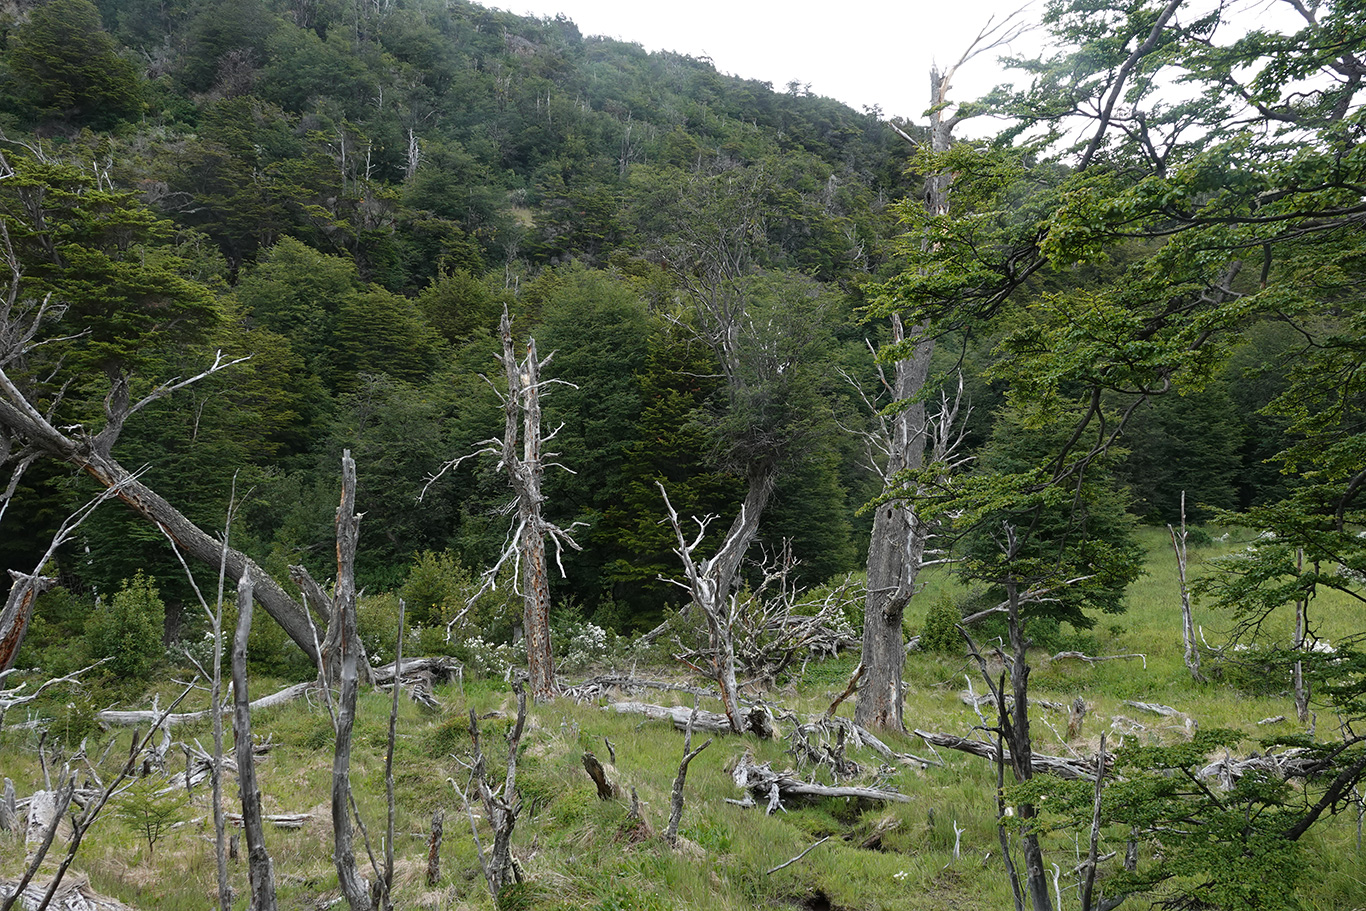  Habitat of the Magellanic Woodpecker, Tierra Del Fuego, Argentina.